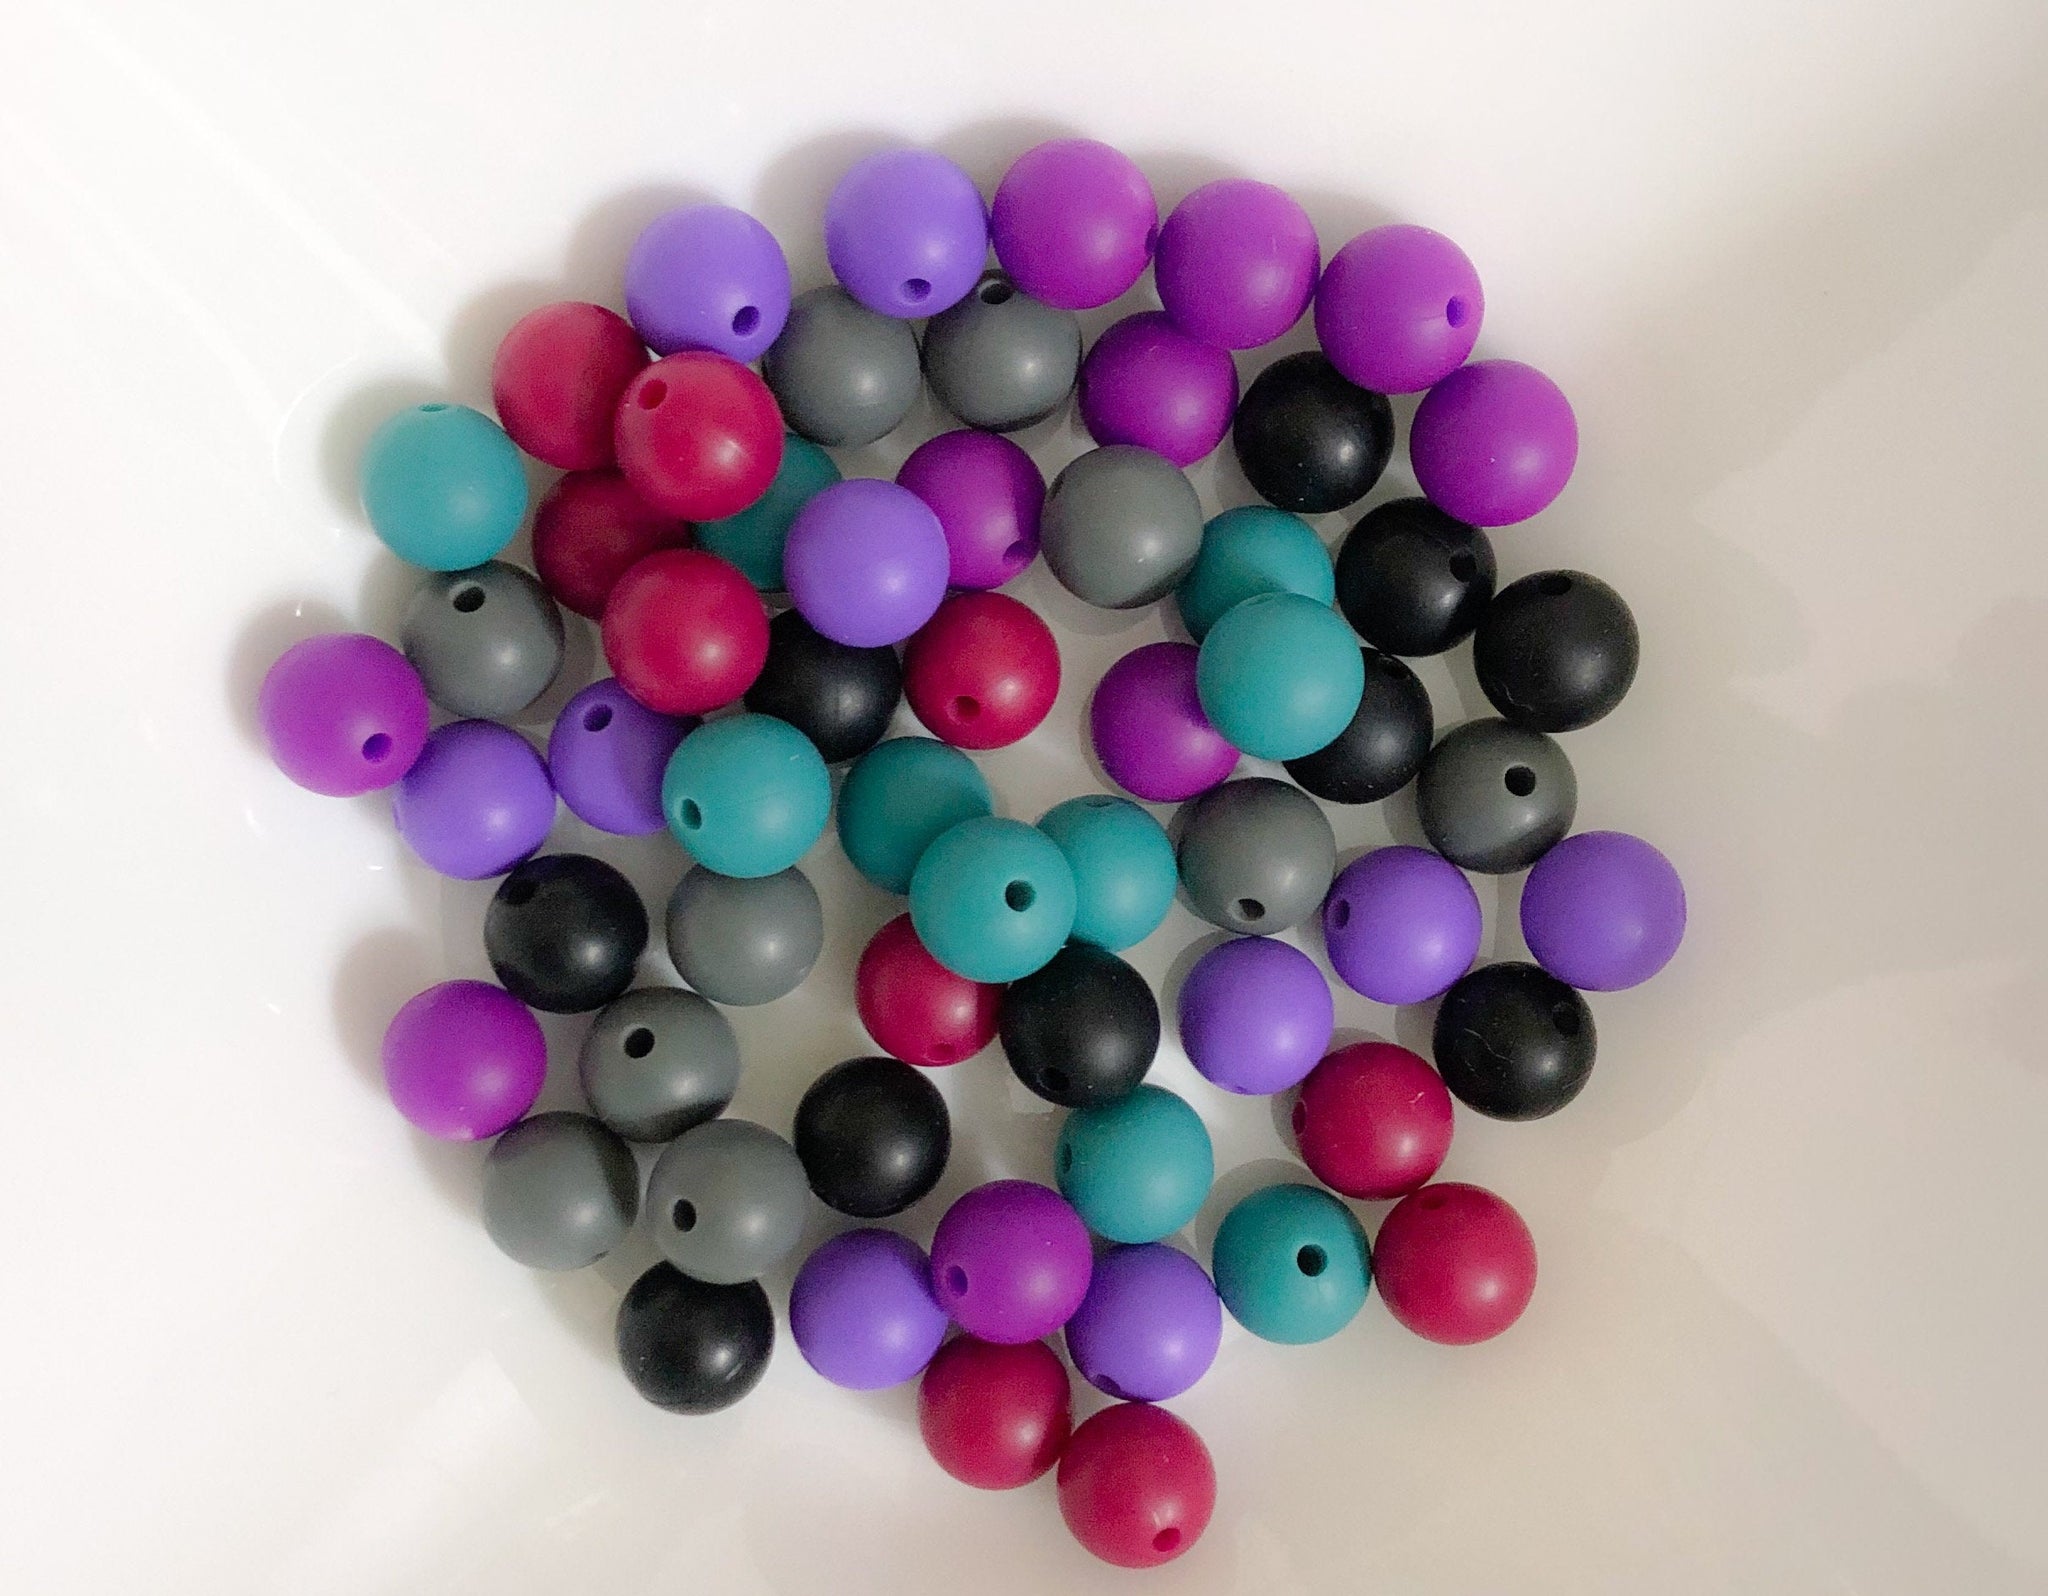 60 Bulk Silicone Beads - Mulberry Tea - Licorice, Steel, Black, Plum, Merlot, Lilac